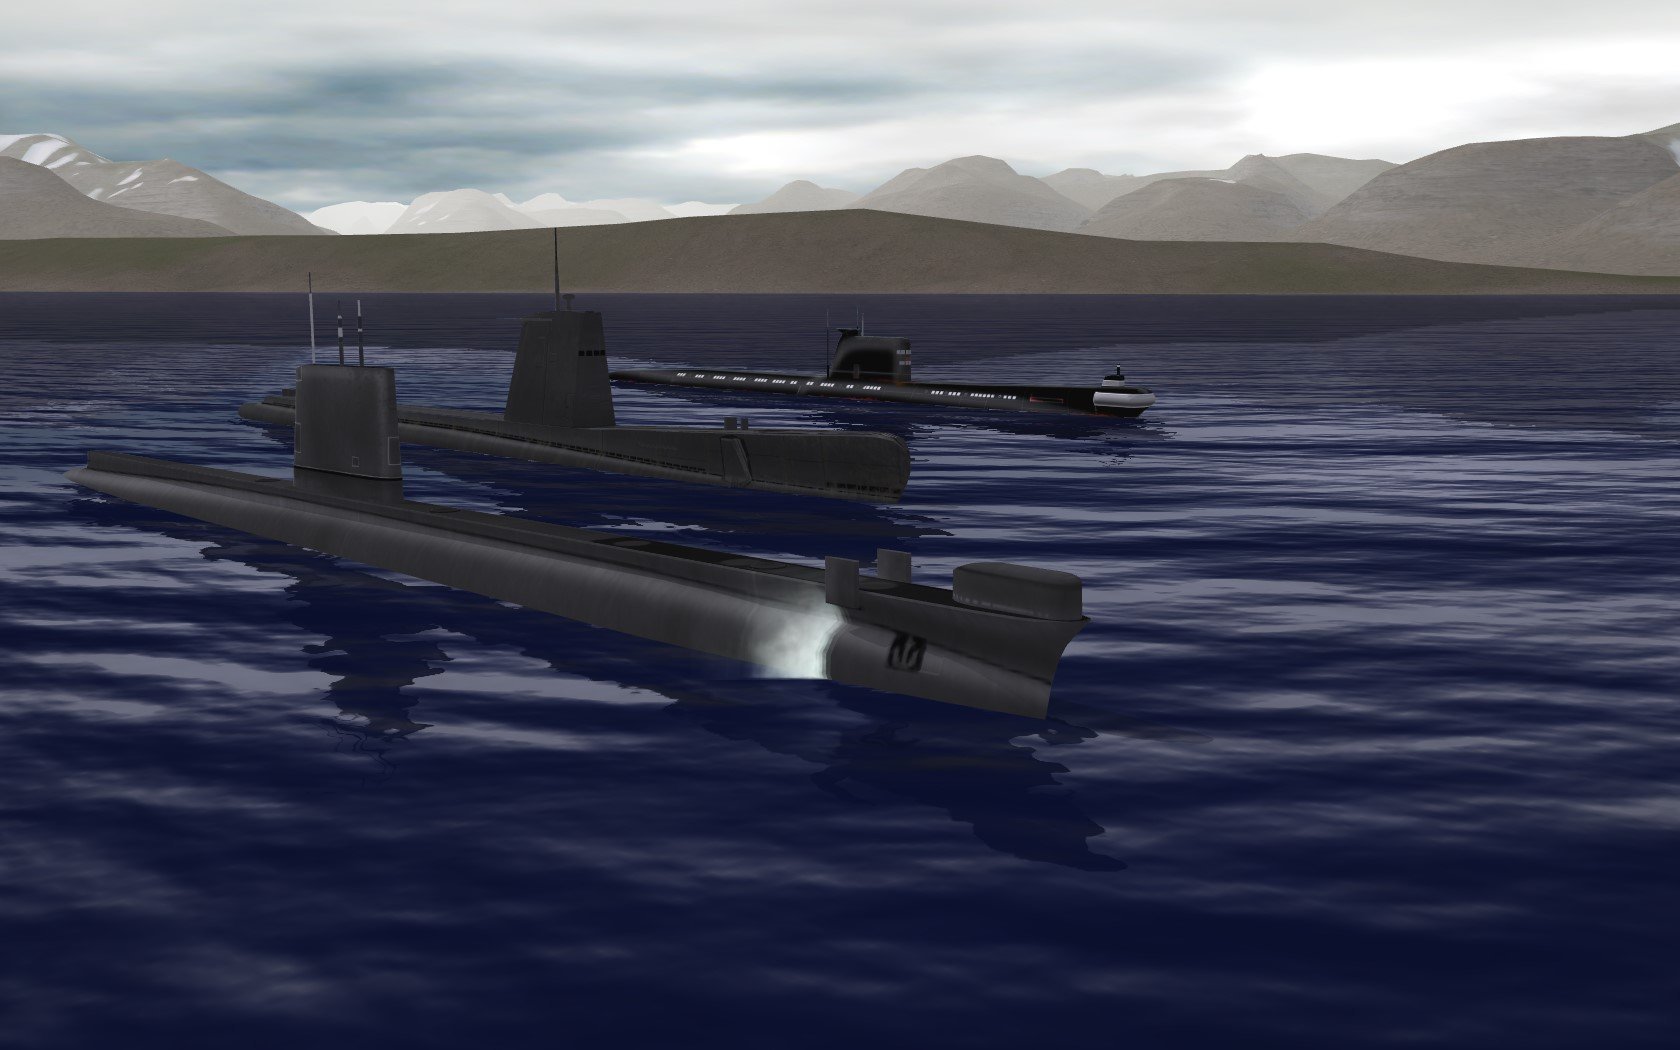 submarinos GuppyII, Foxtrot, Oberon